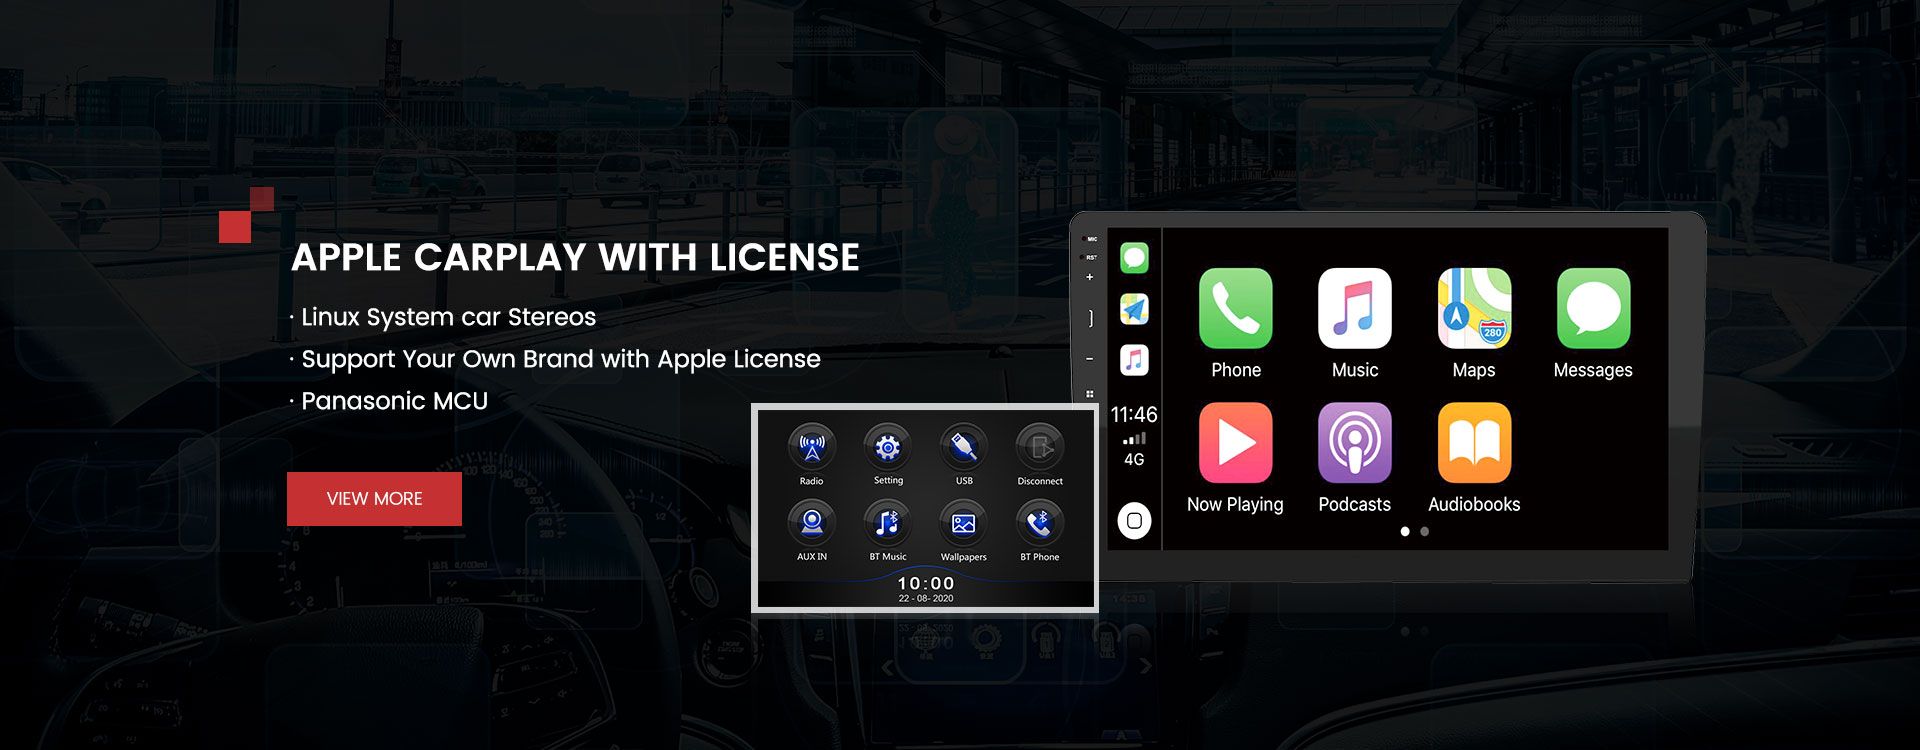 Apple Carplay with License